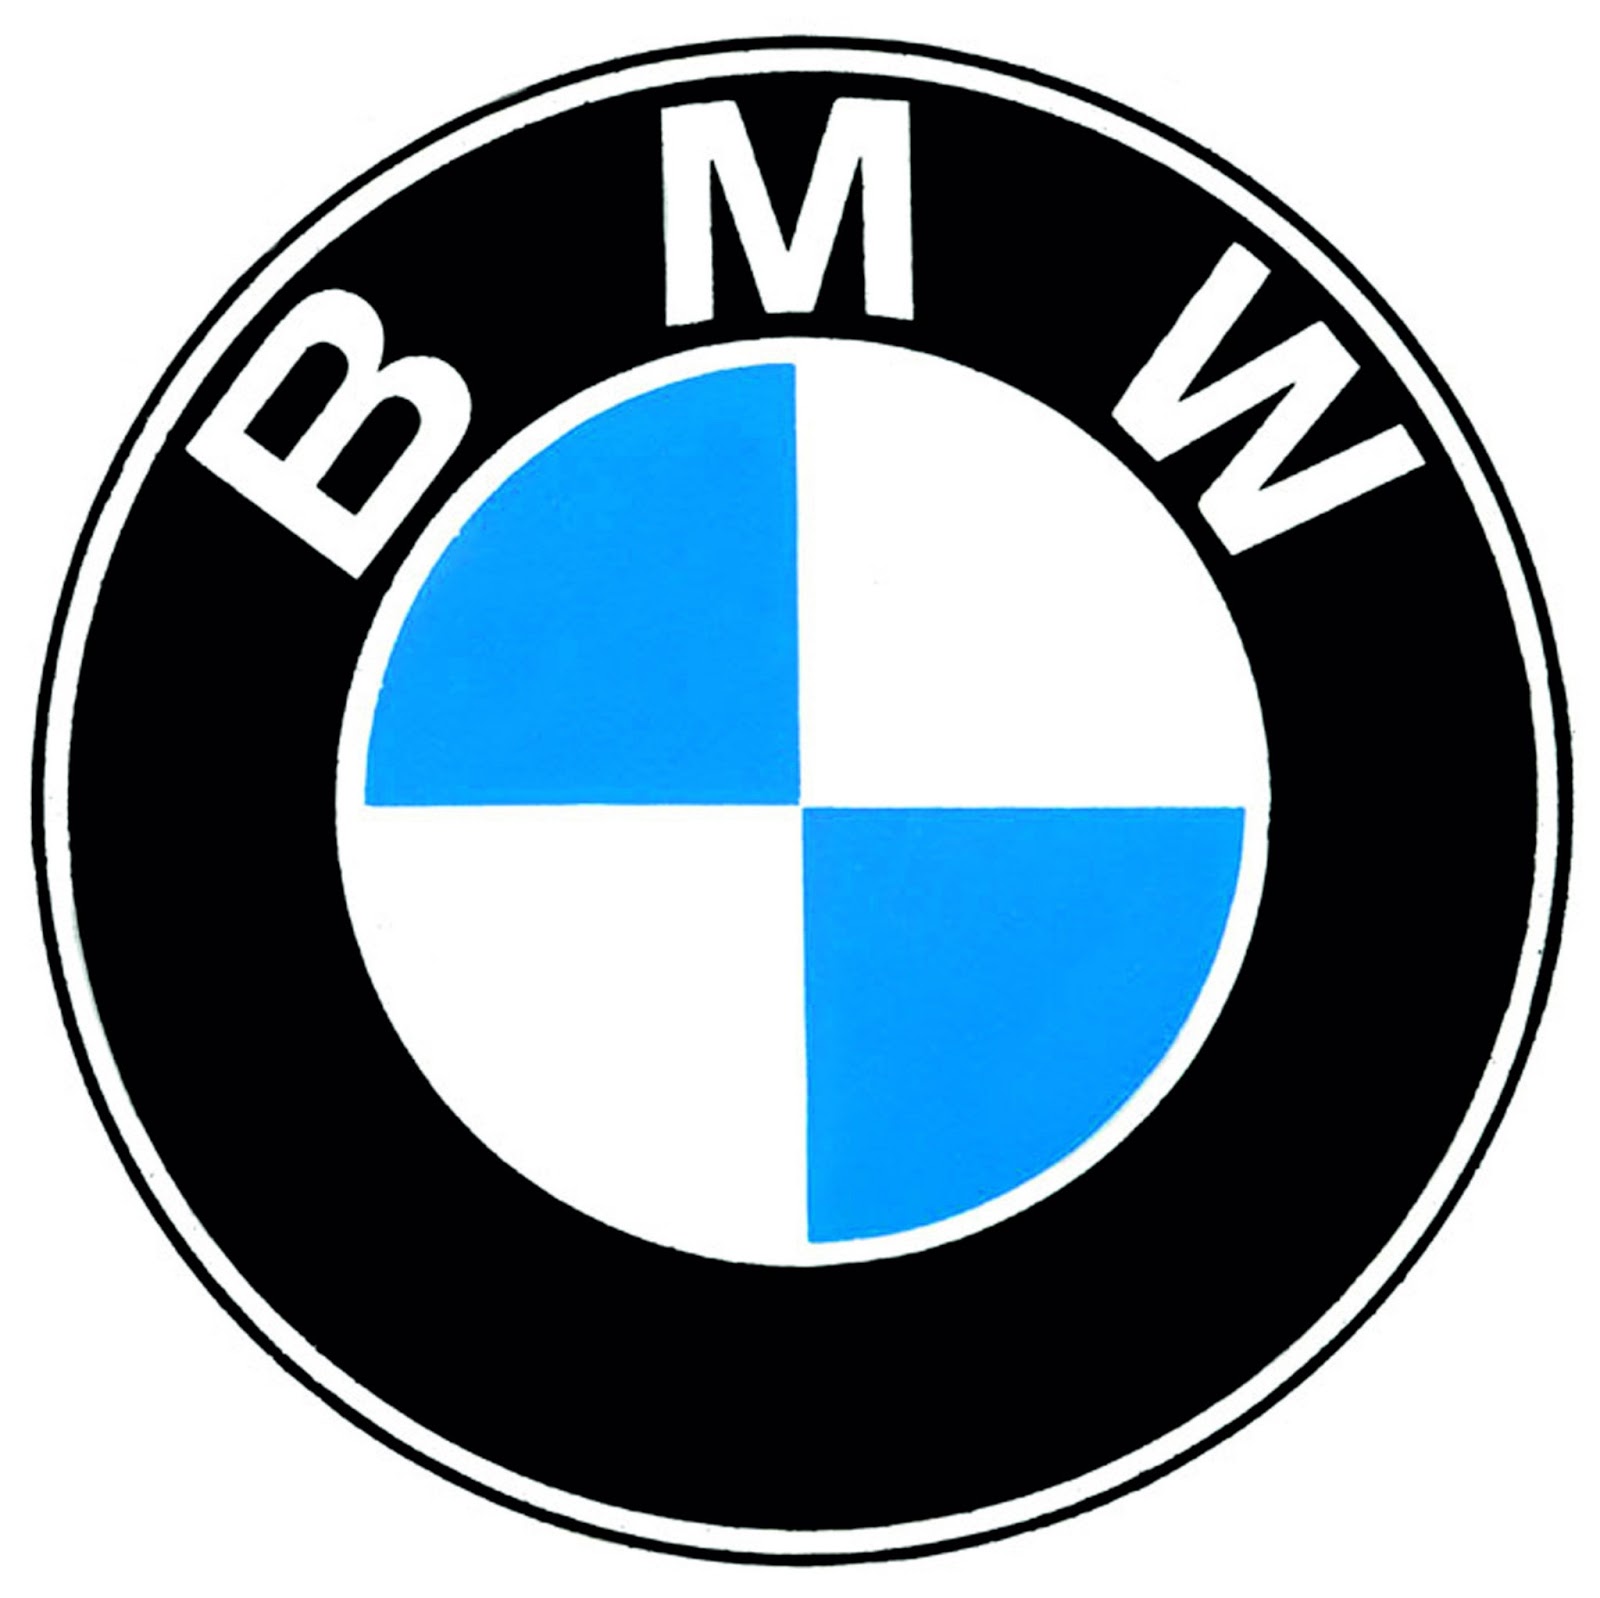 Bmw logos history #2